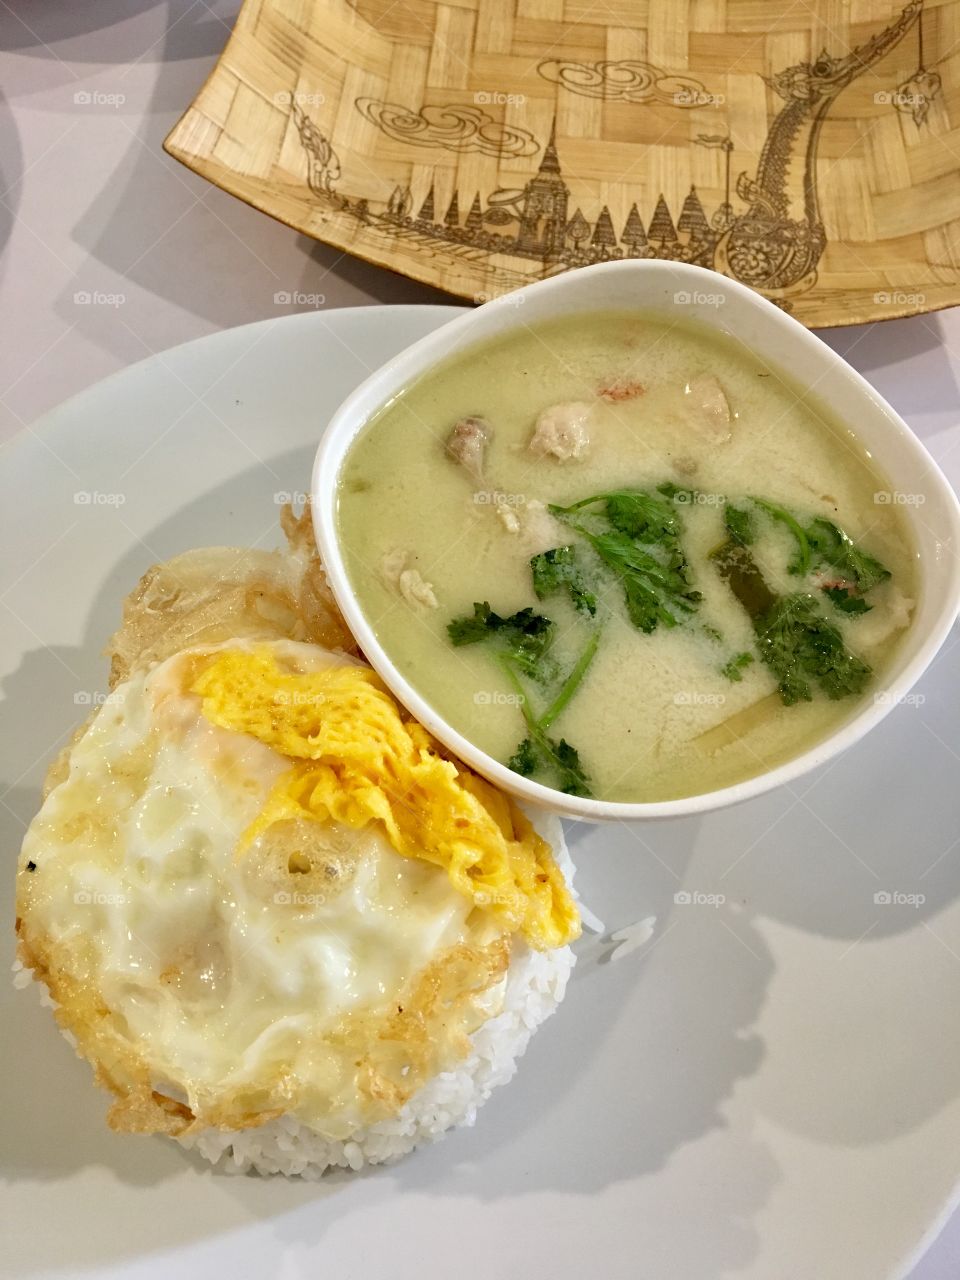 Bangkok Food